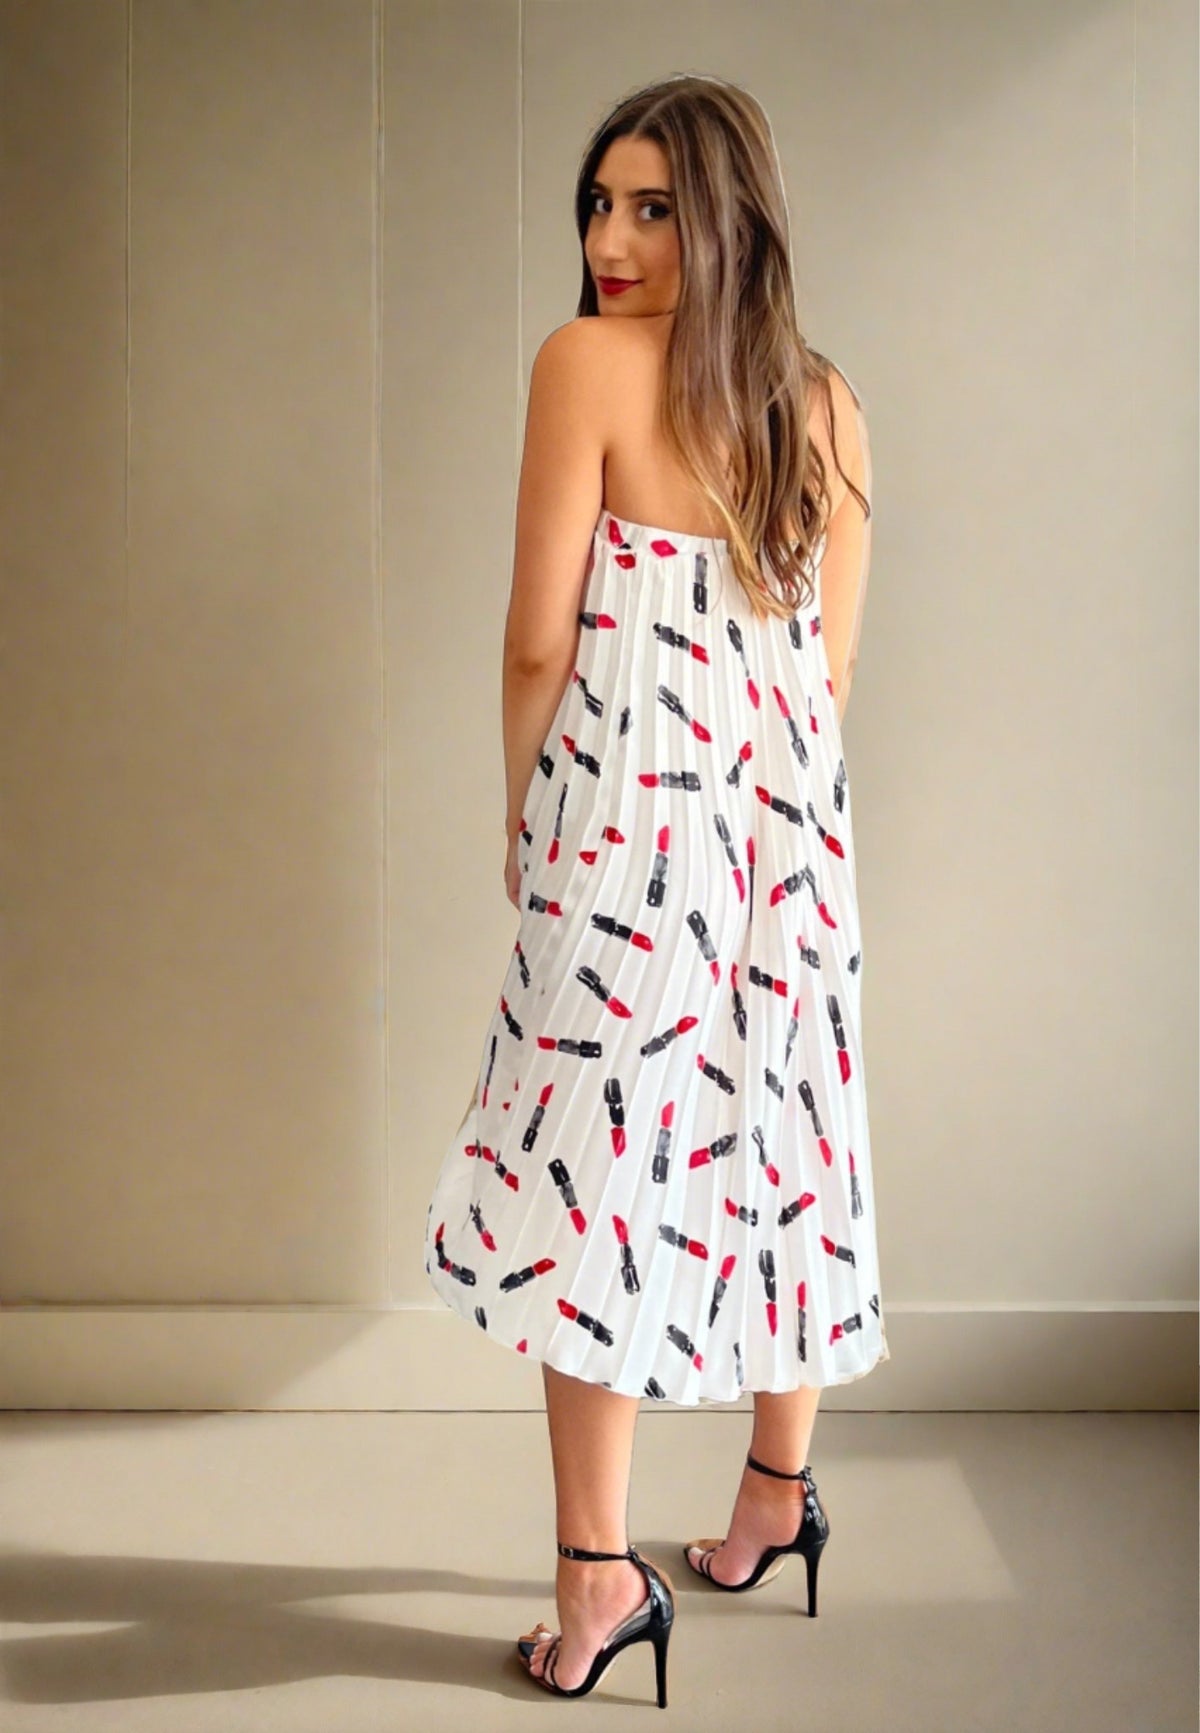 Yan Neo London Donni Lipstick Print Pleated Asymmetric Strapless Dress - Yan Neo London